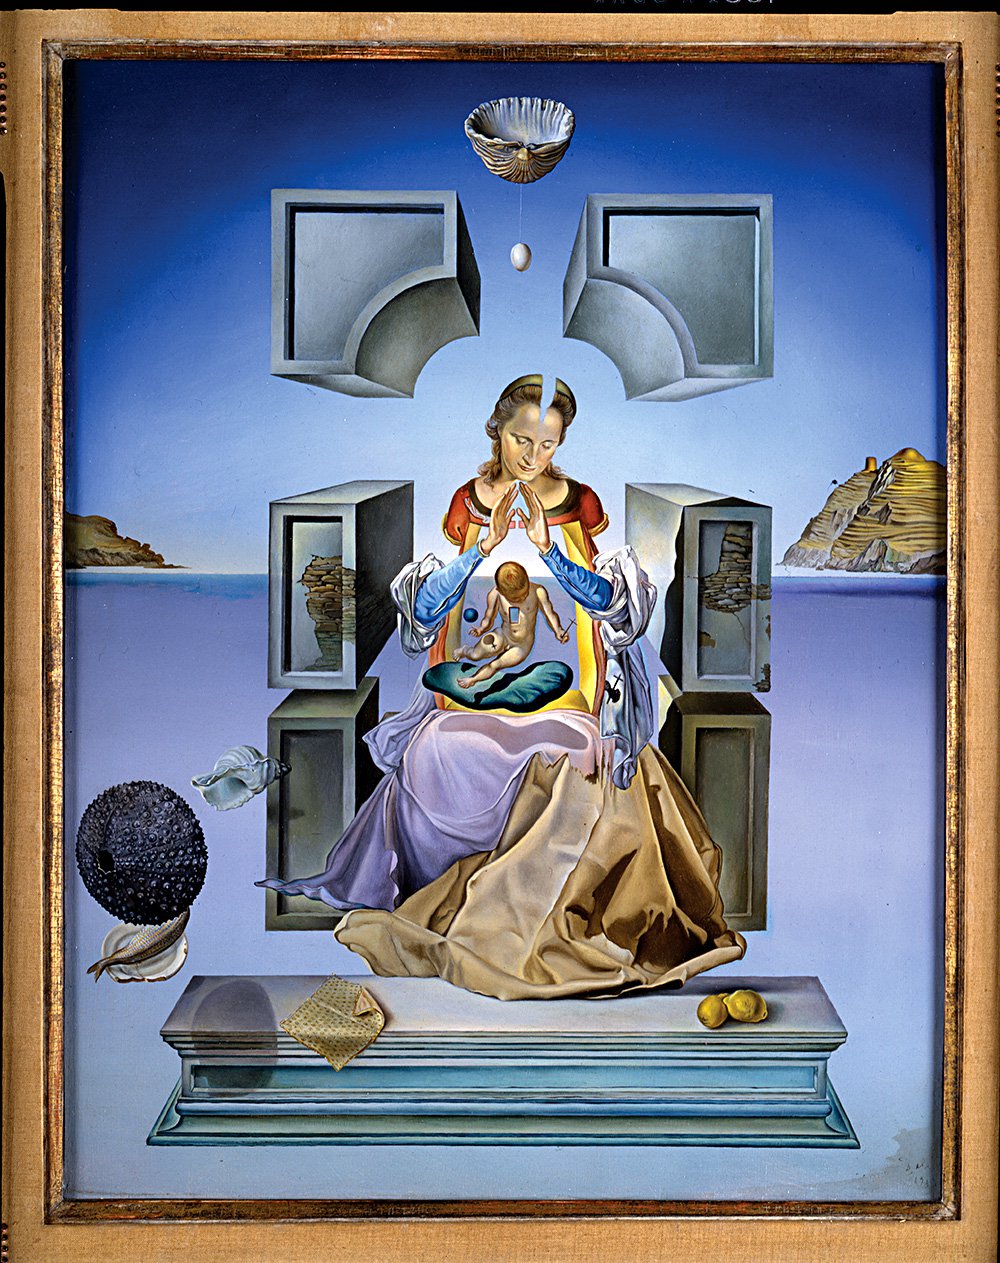 Cальвадор Дали. «Мадонна Порт-Льигата». 1949. Фото: Haggerty Museum of Art, Marquette University / Fundació Gala-Salvador Dalí